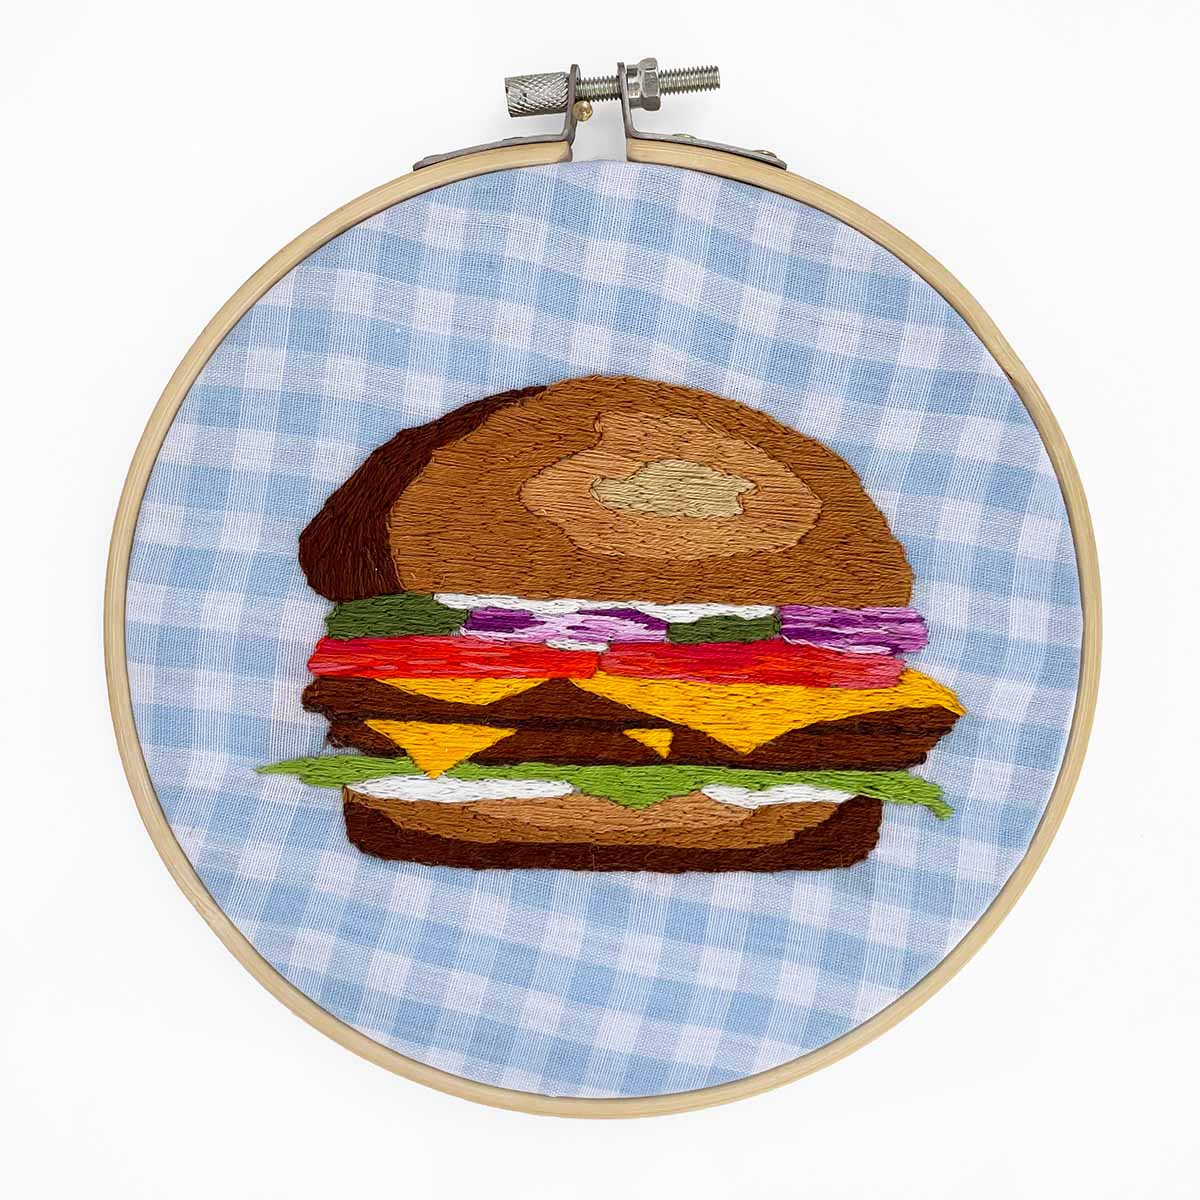 Strange Picnic: The Burger embroidery by Pretty Strange Design